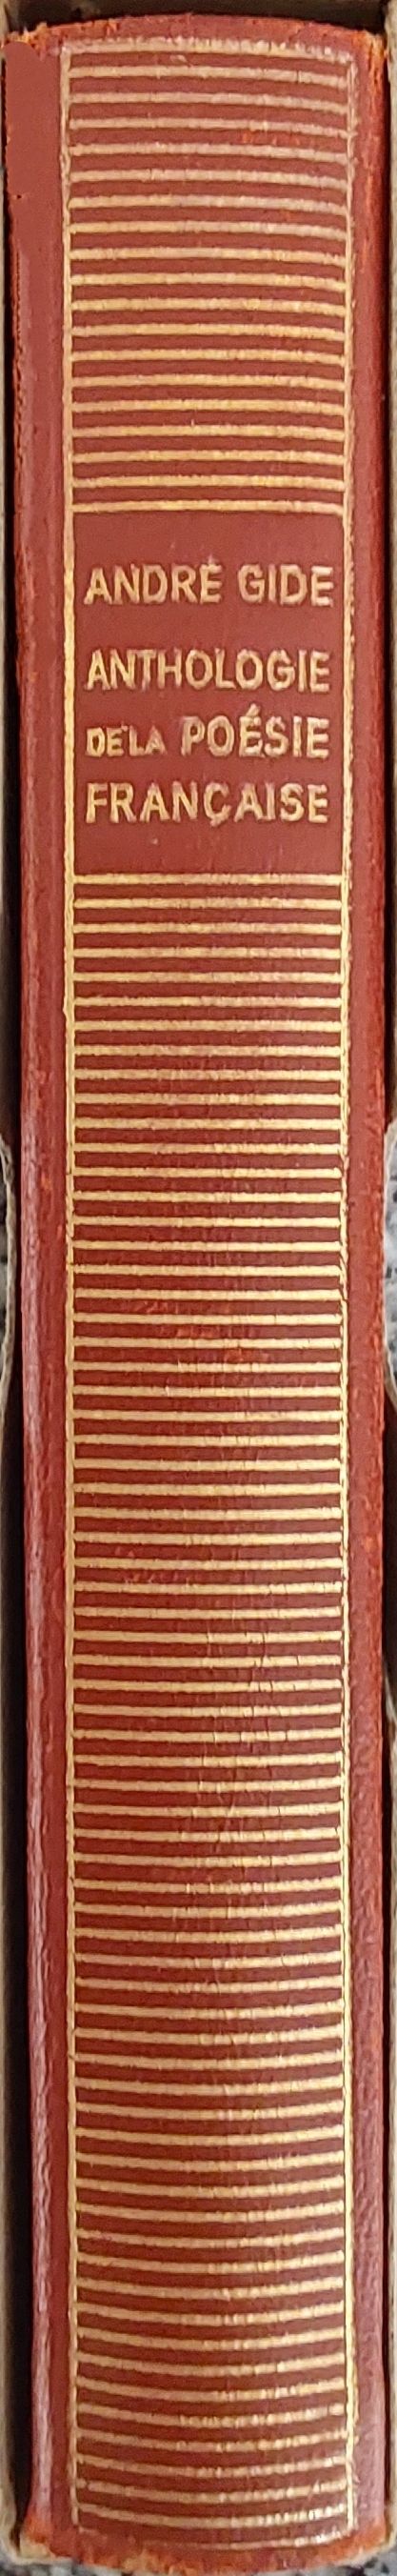 Volume 378 de Marguerite Yourcenar dans la Bibliothèque de la Pléiade.